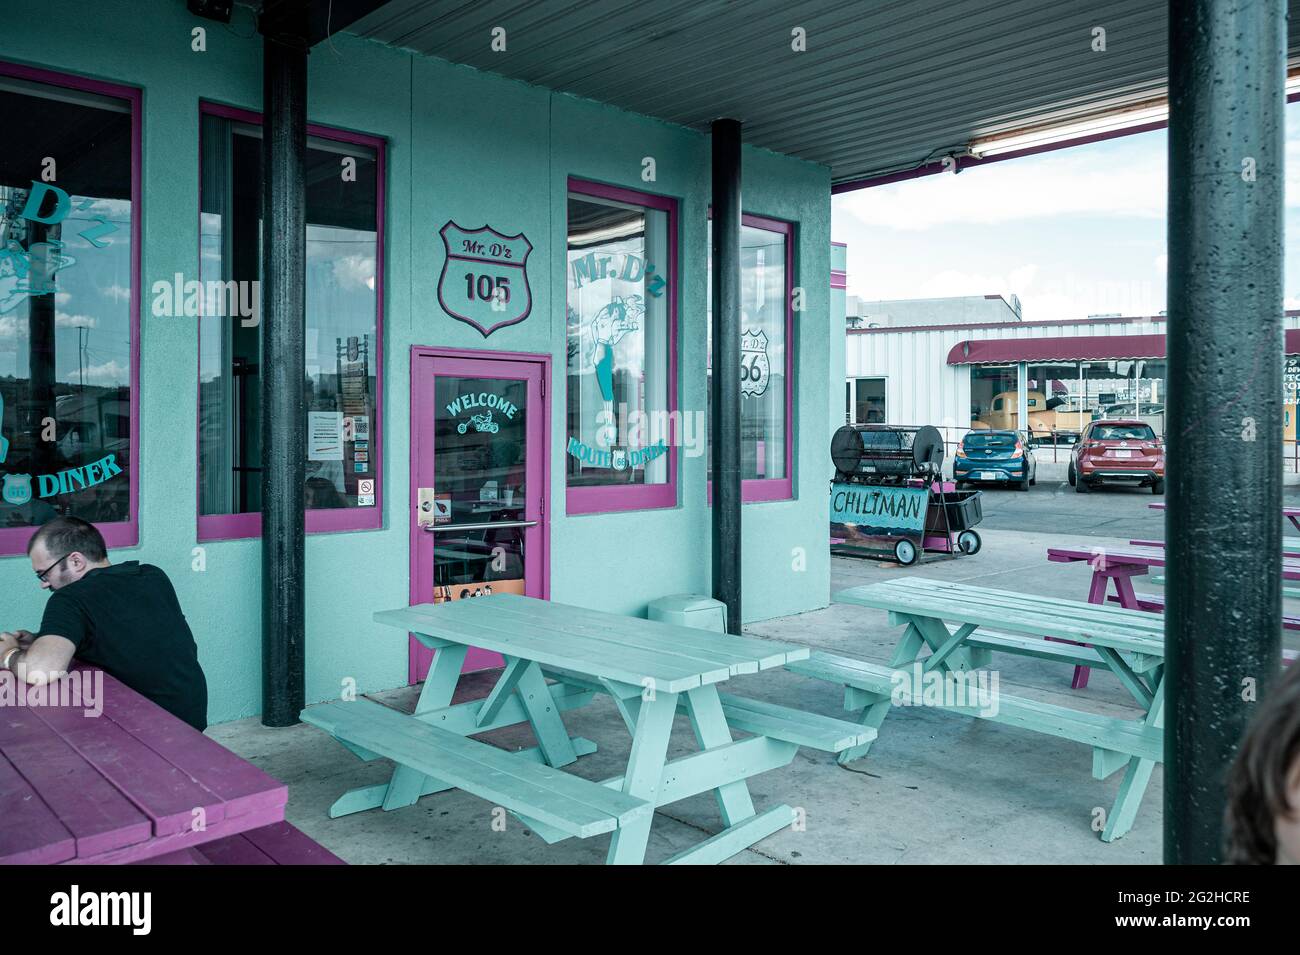 Mr. D'z famous roadside diner on historic Route 66 highway Kingman Arizona, USA Stock Photo